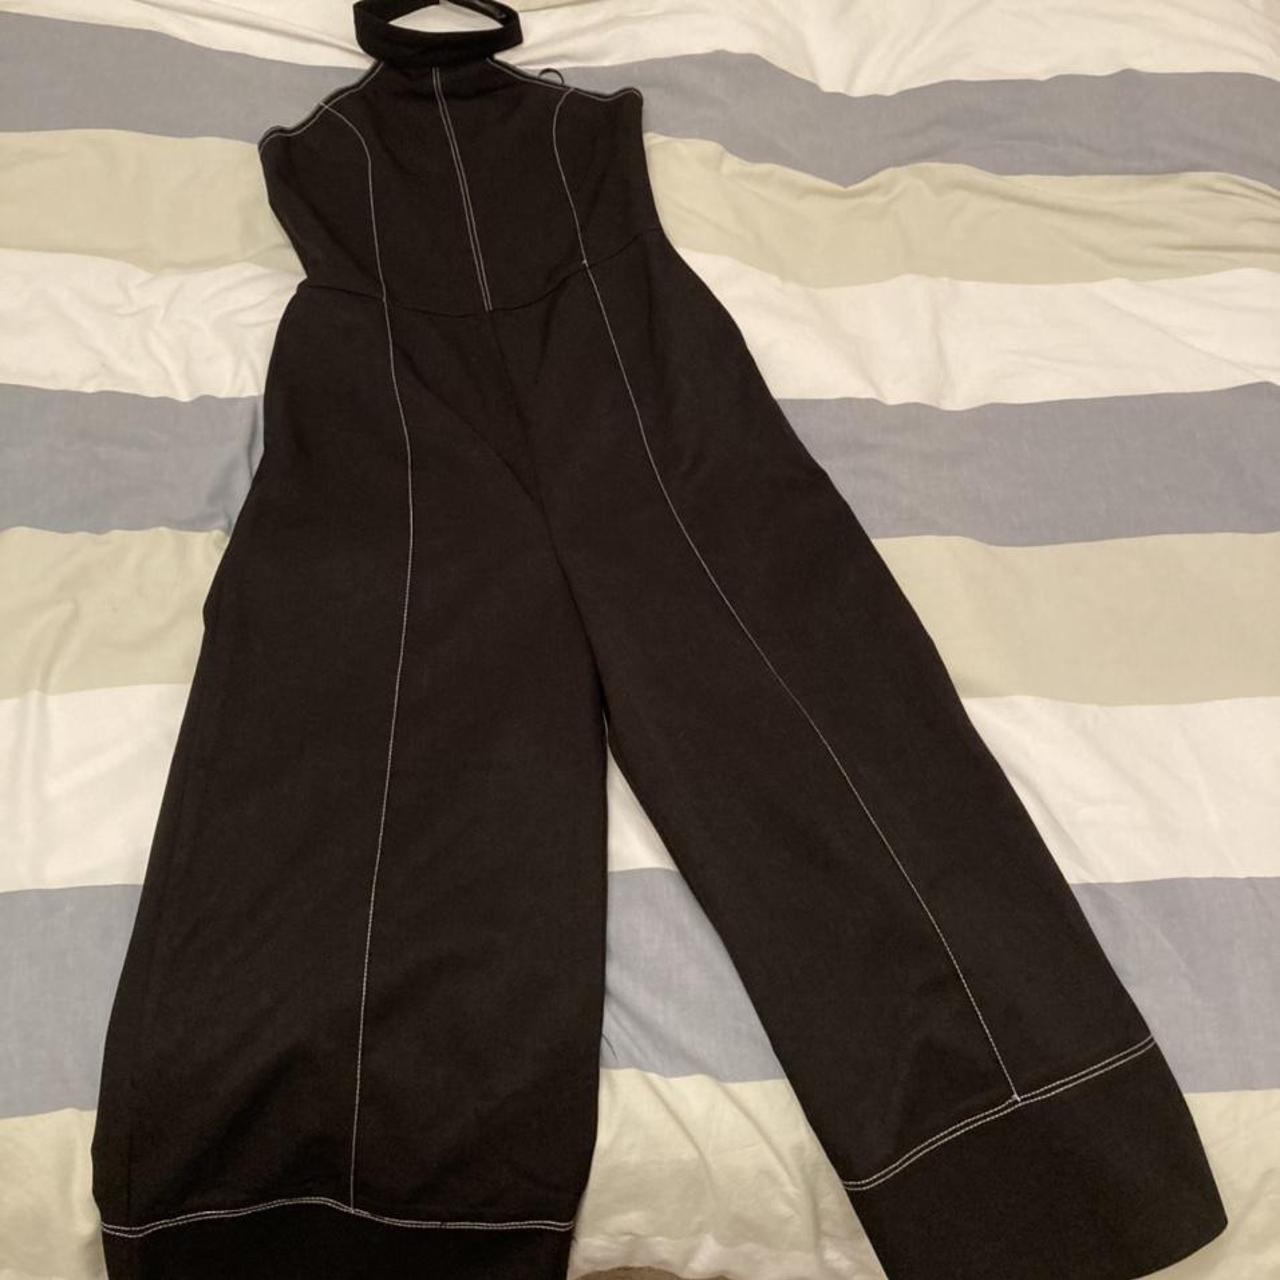 Black Missguided wide leg, lace top jumpsuit with - Depop